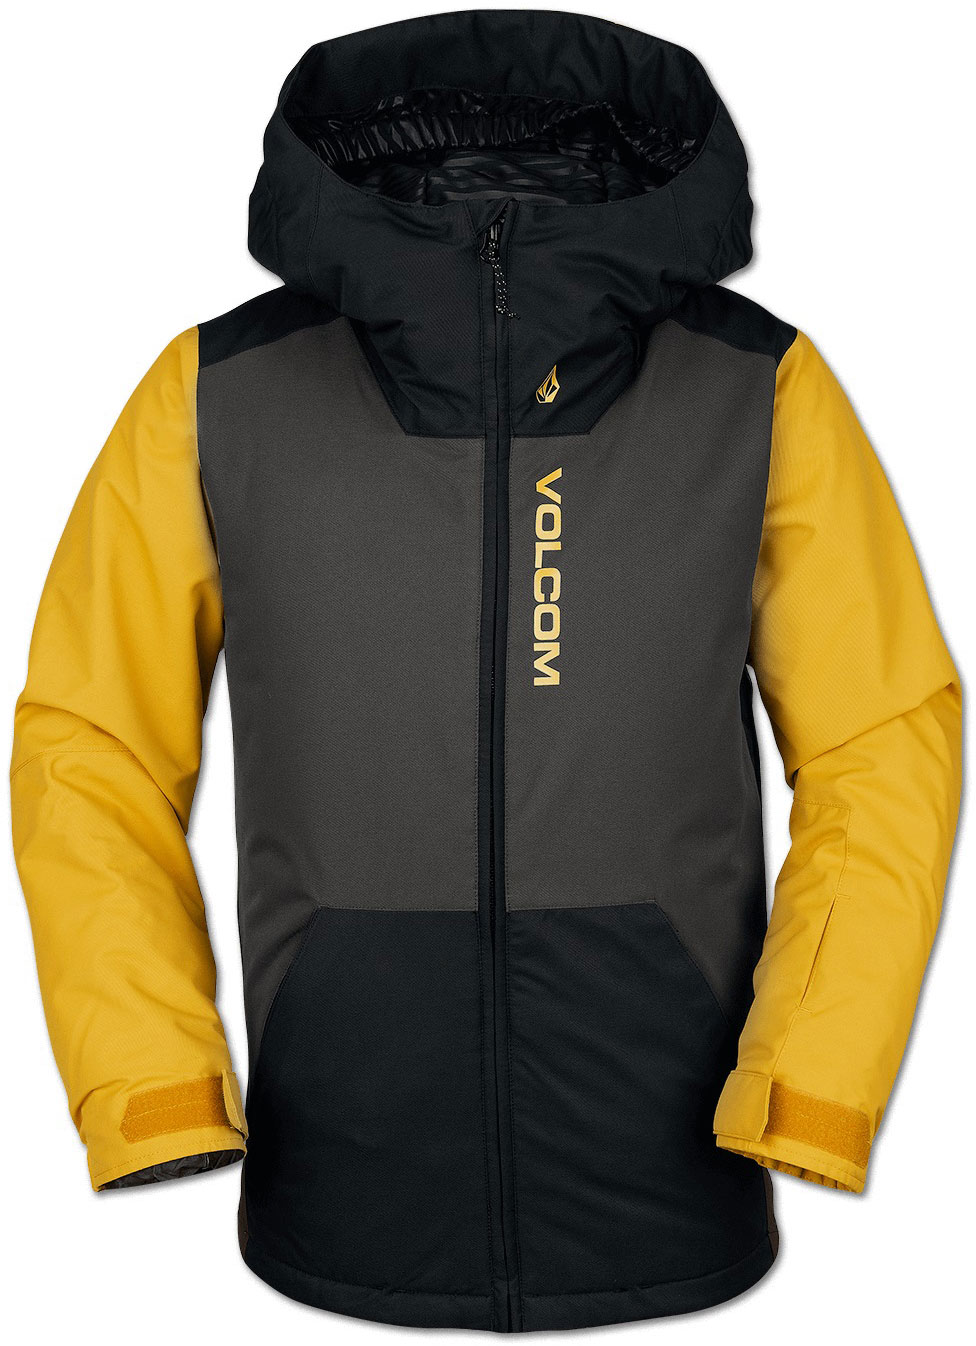 Boys’ ski/snowboard jacket